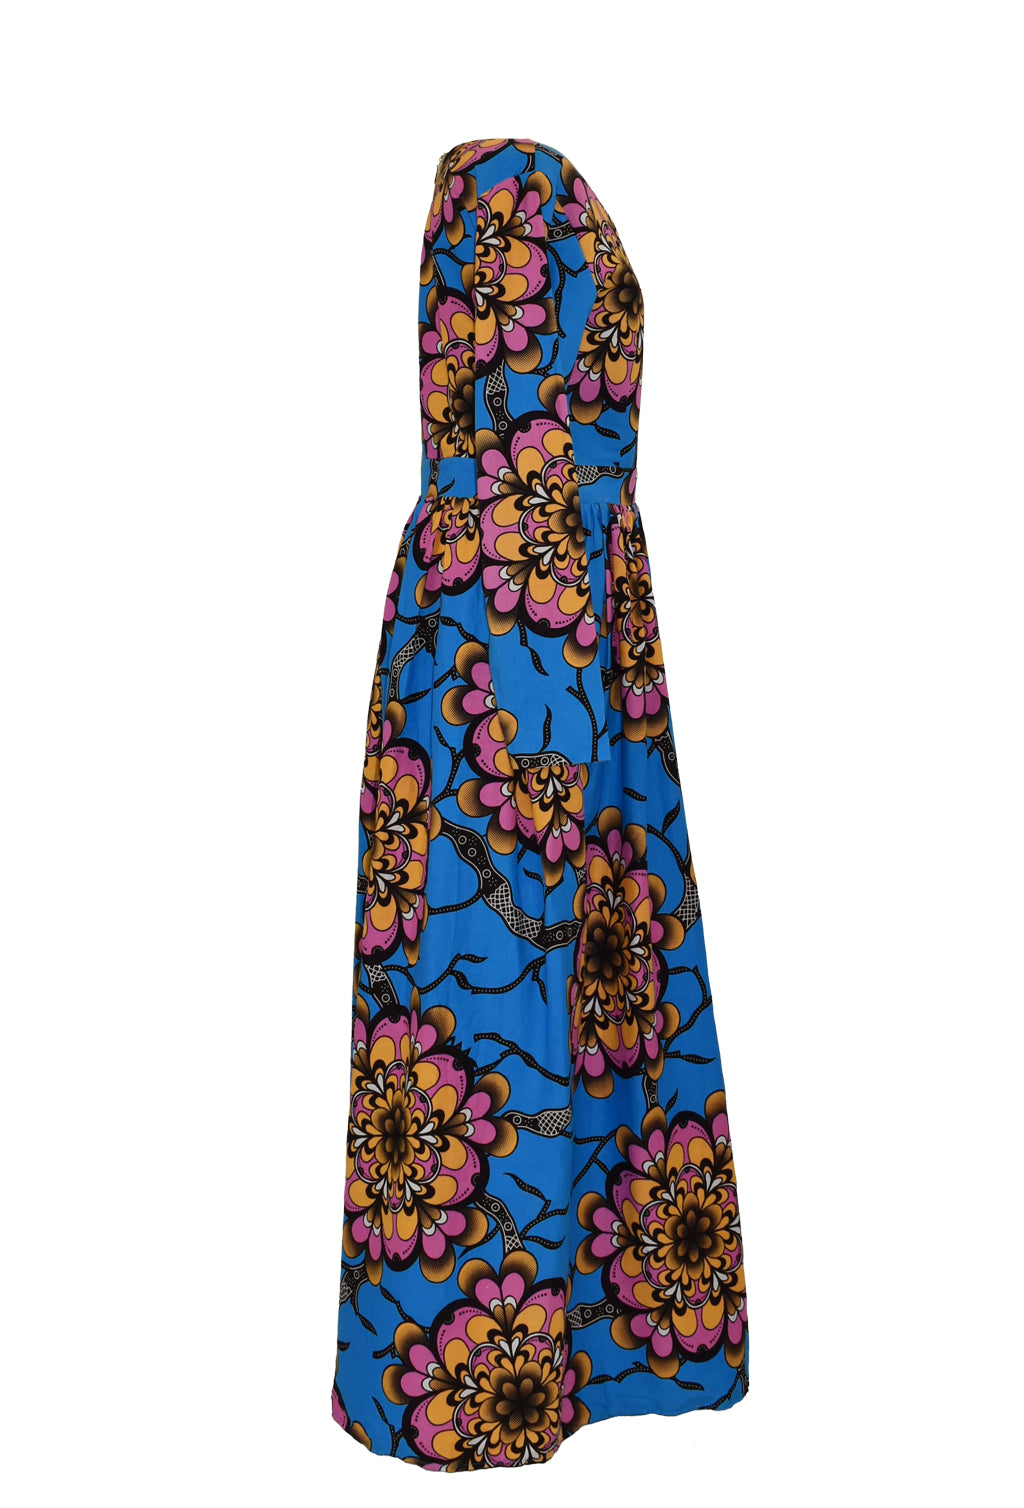 Dutch Wax Print Vivid Blue And Pink Maxi Dress | Vintage